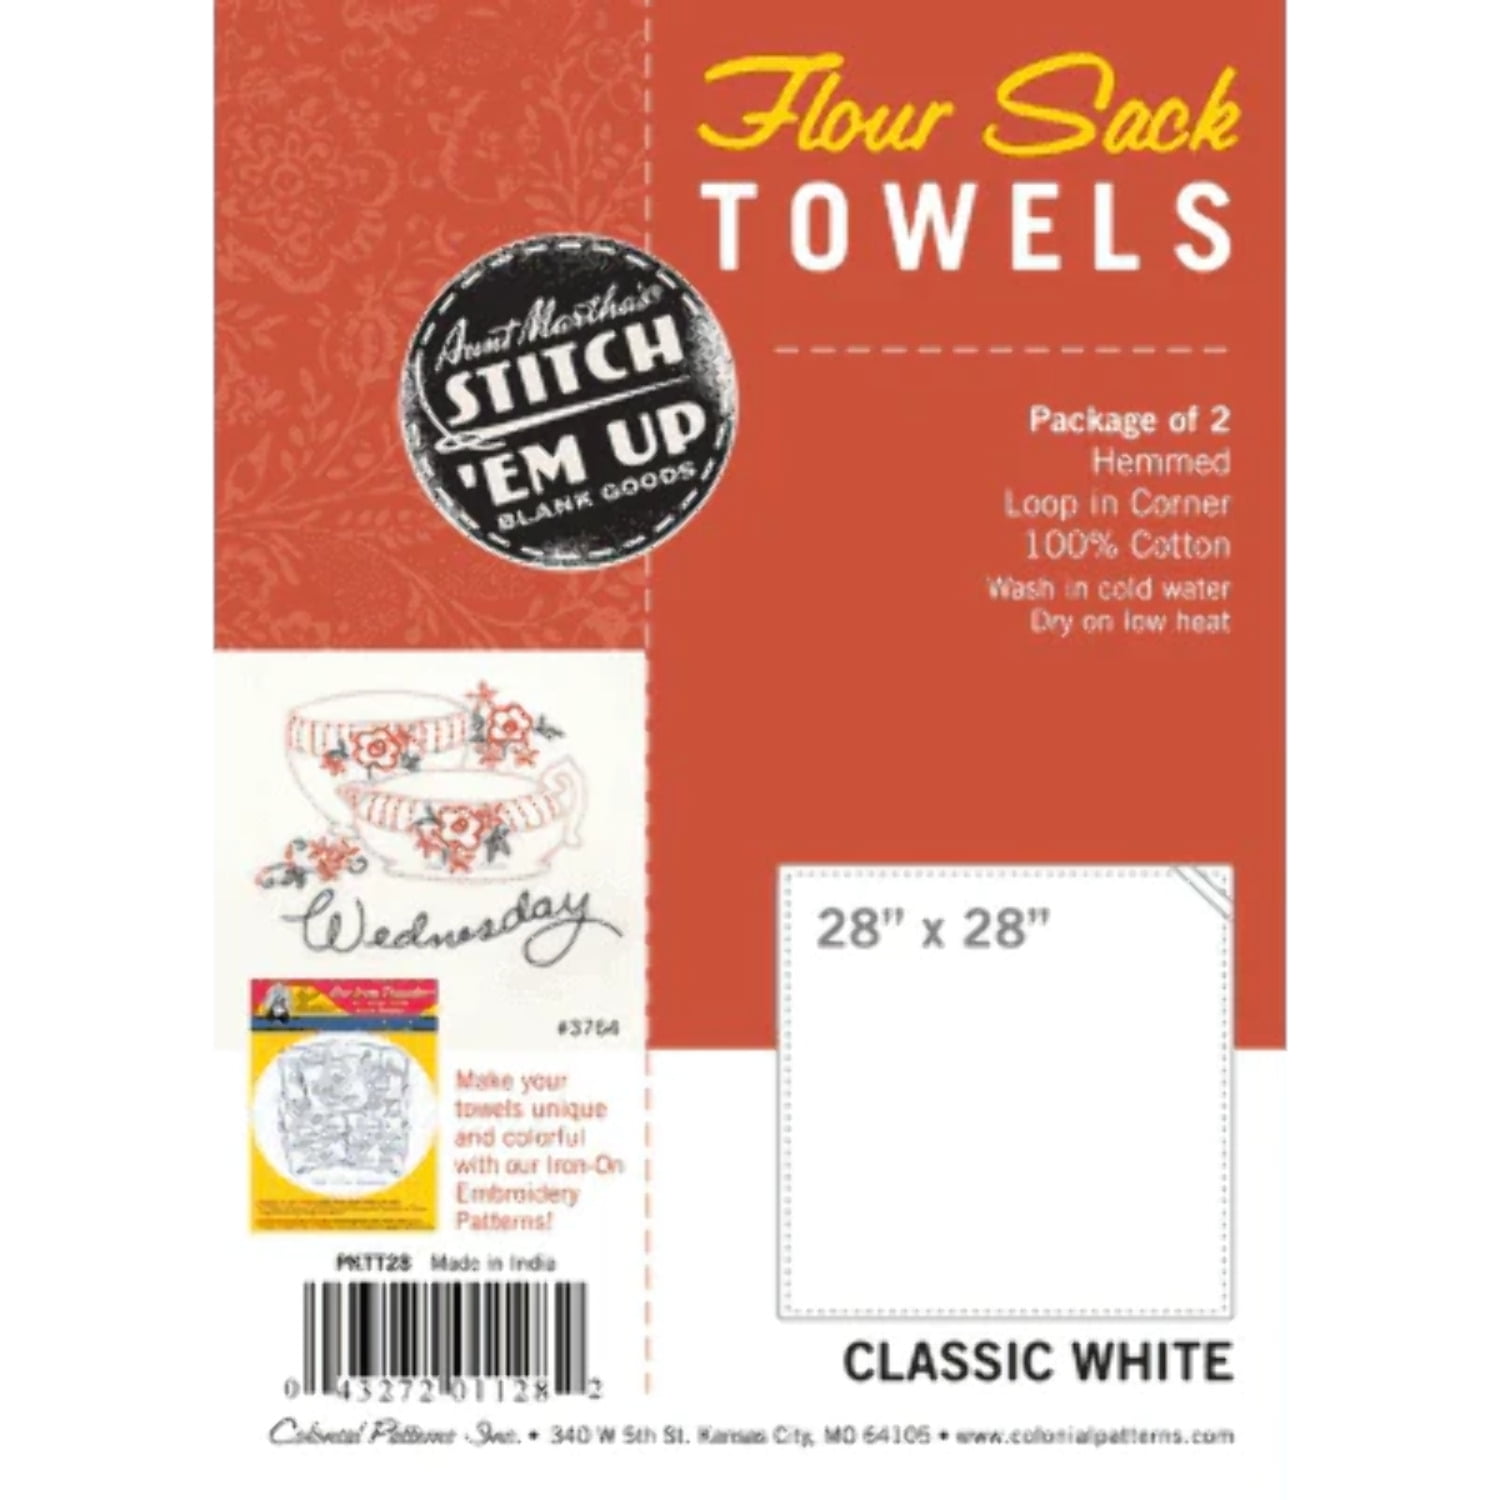  Organic Cotton Flour Sack Kitchen Towels - 10 Pack Organic  Cotton White Tea Towels -Extra Large Flour Sack Cotton Dish Towels -  Lint-Free Unbleached White Kitchen Towels - 27x27 (Natural 